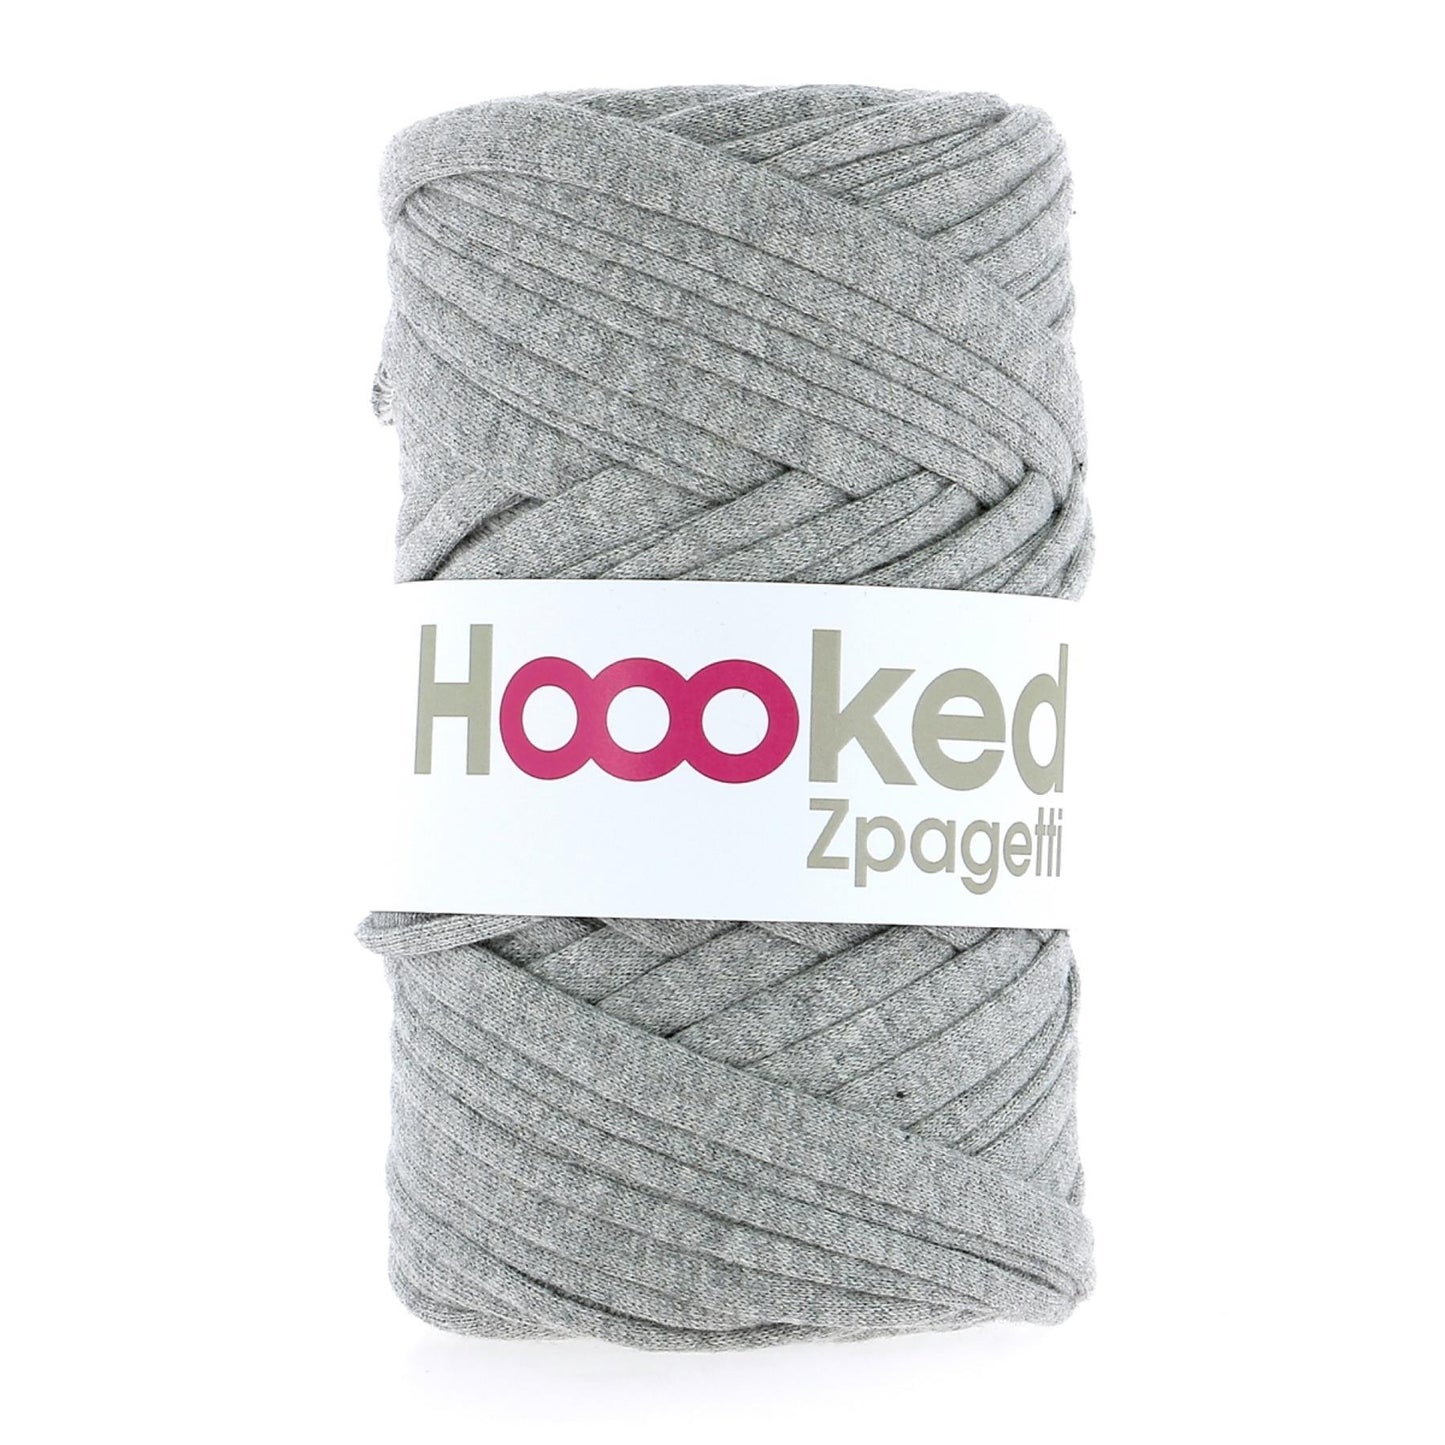 Hoooked Zpagetti Grey Cotton T-Shirt Yarn - 60M 350g